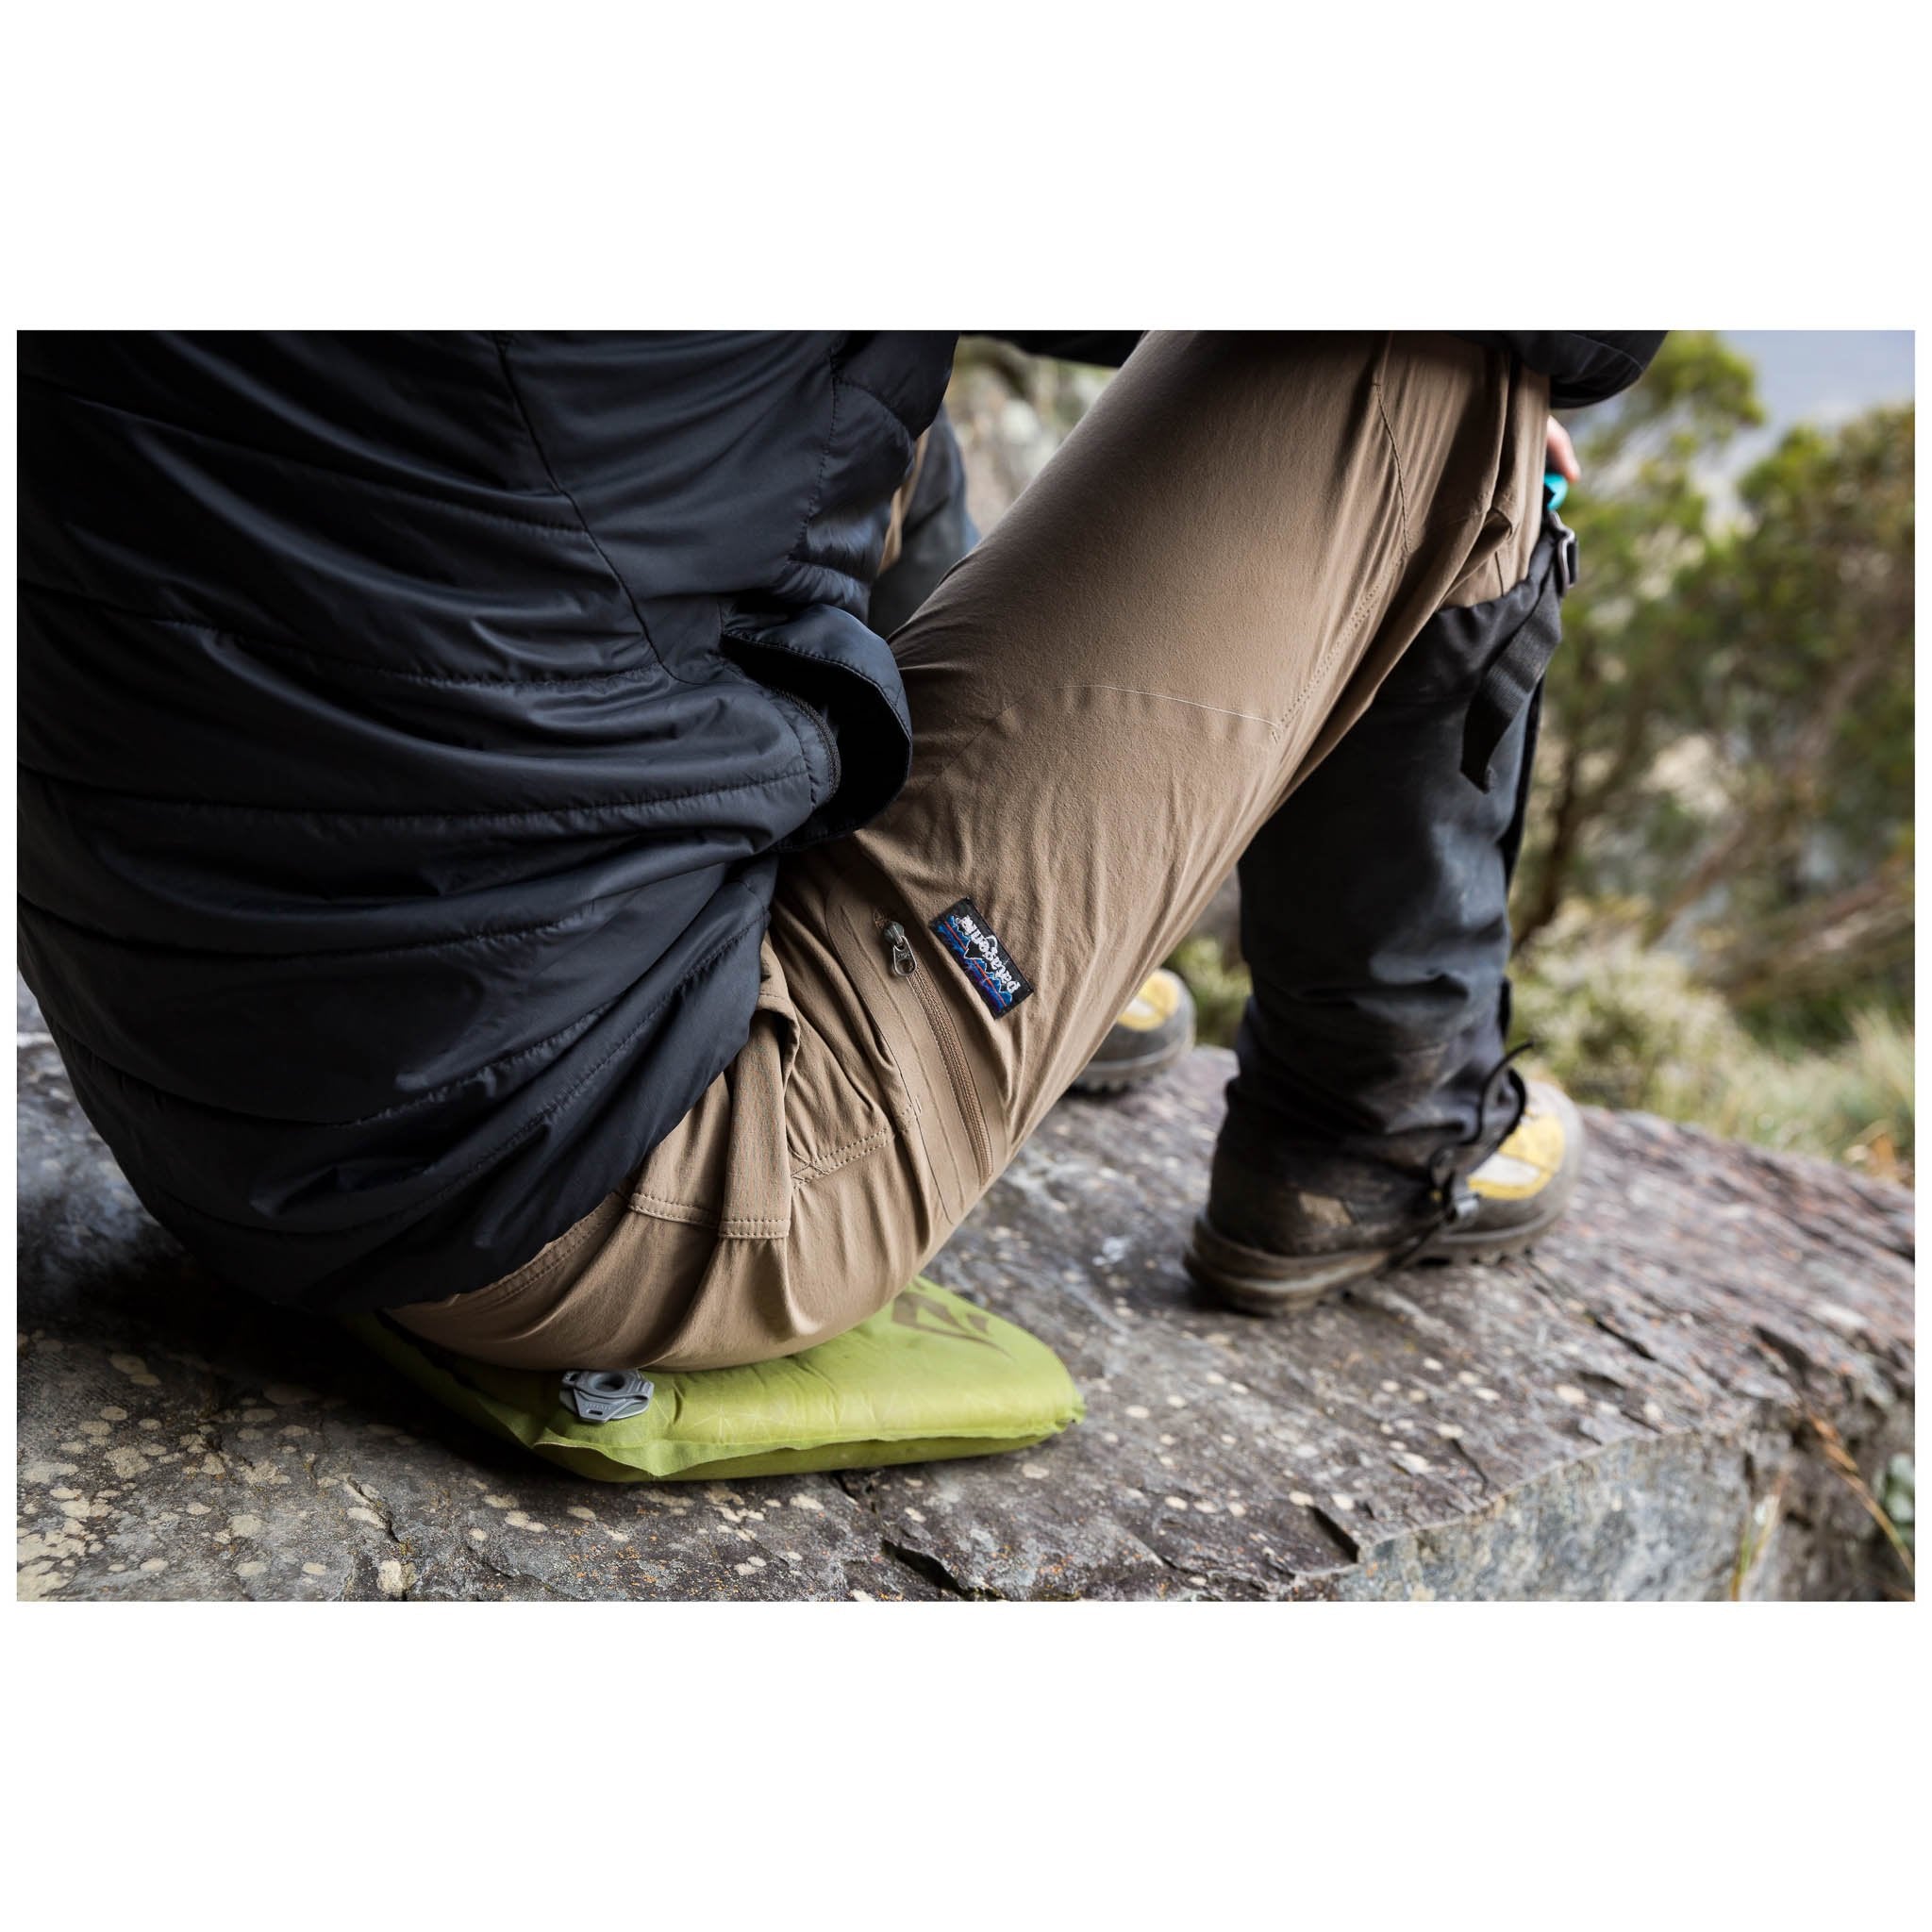 Sea To Summit Grasshopper Gaiters - Find Your Feet Australia Hobart Launceston Tasmania